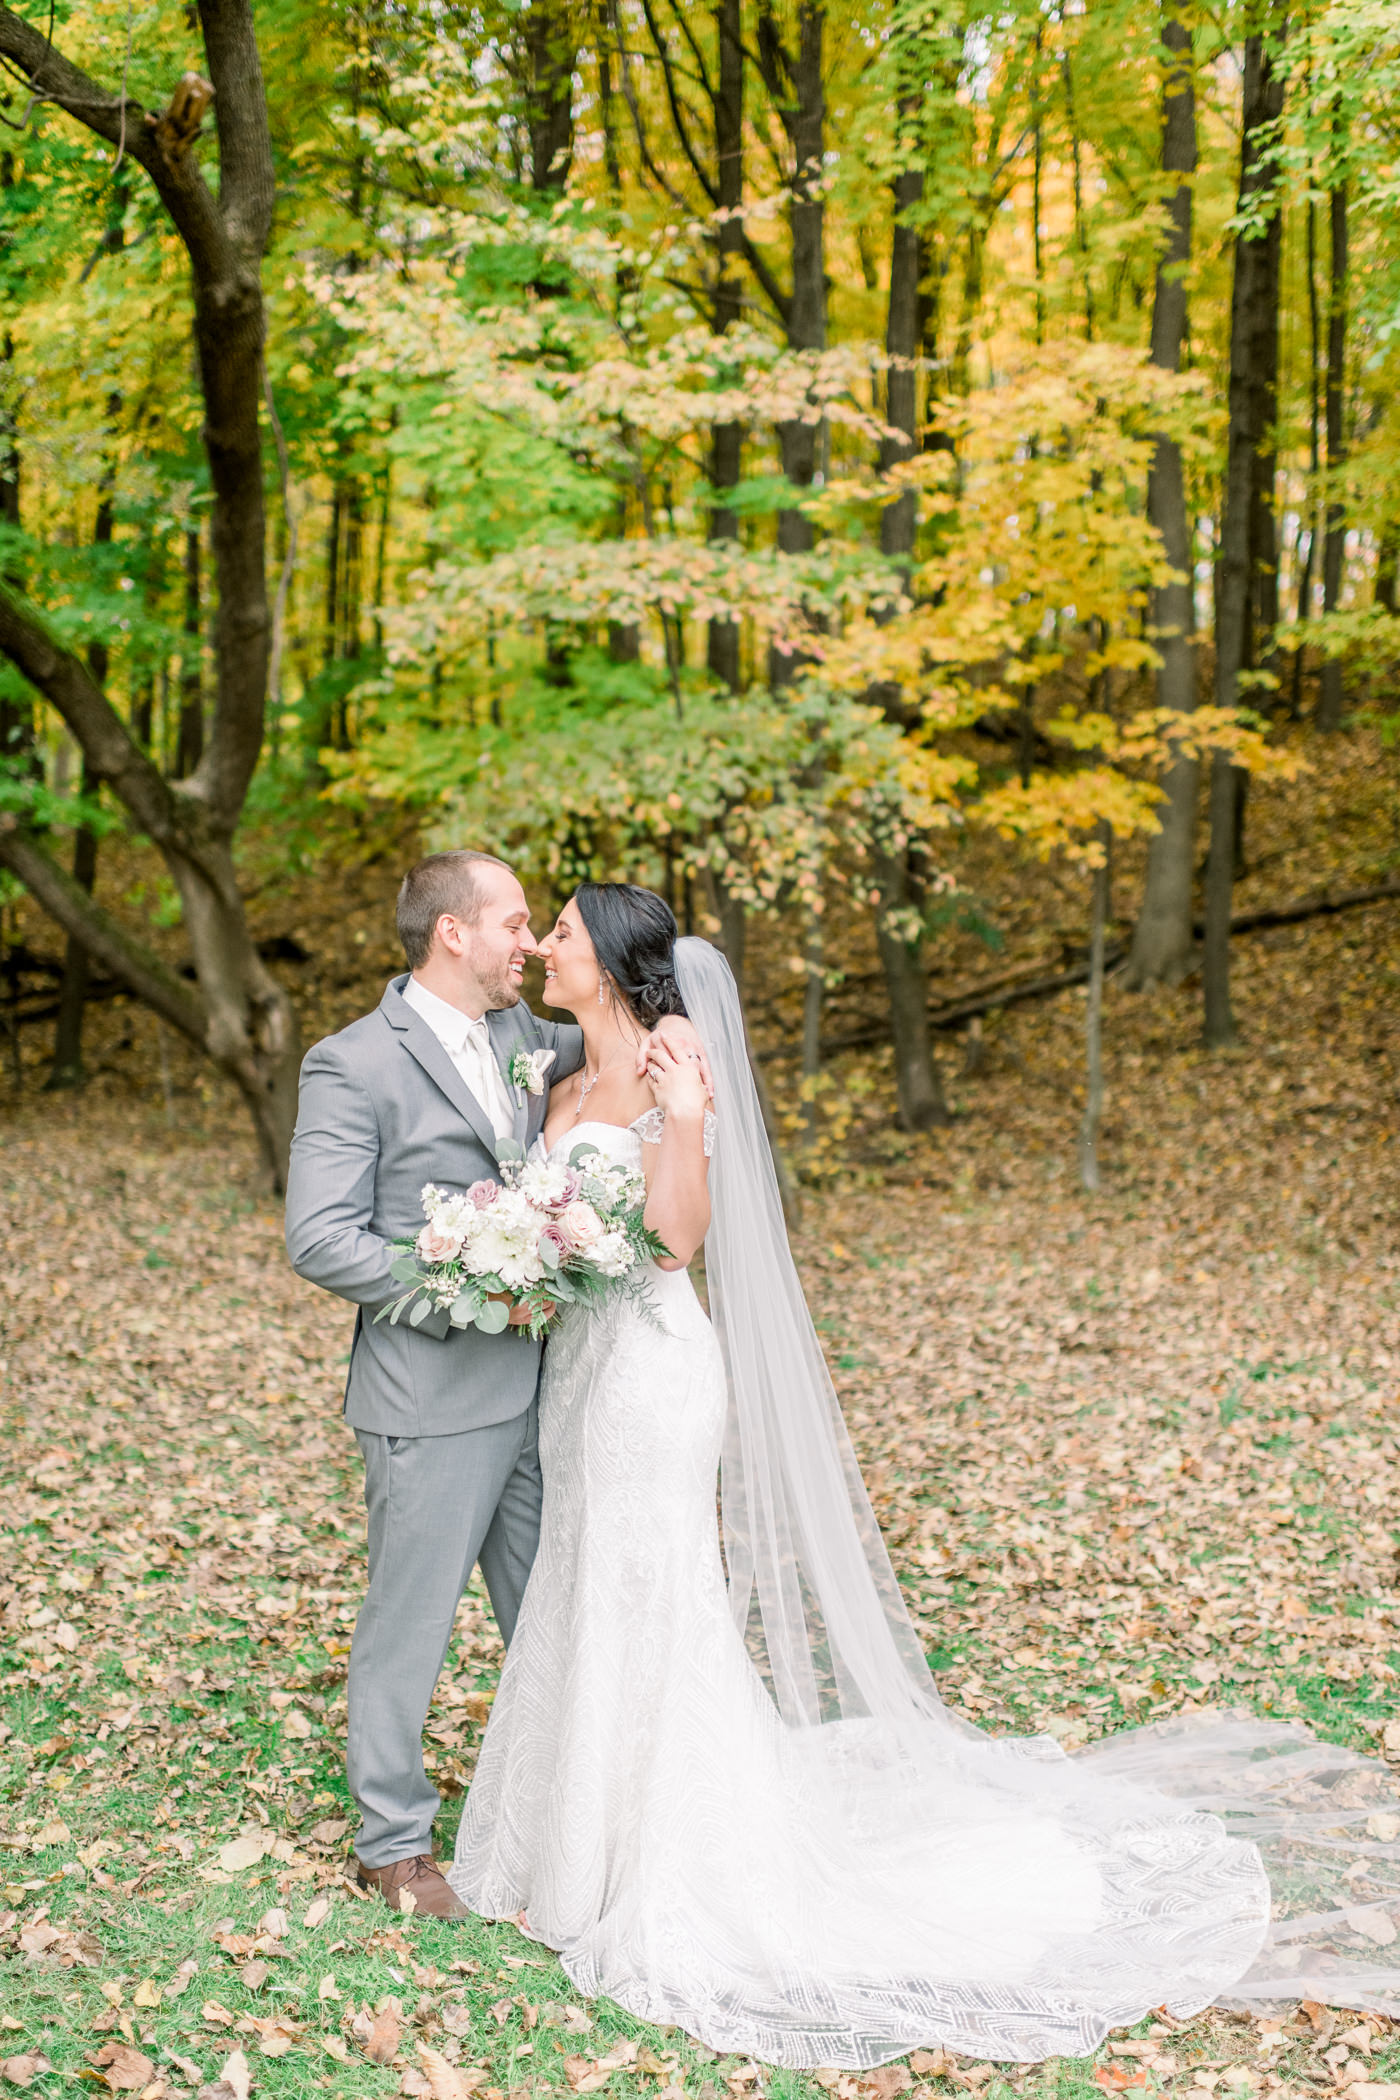 Pamperin Park Wedding Photographers - Larissa Marie Photography